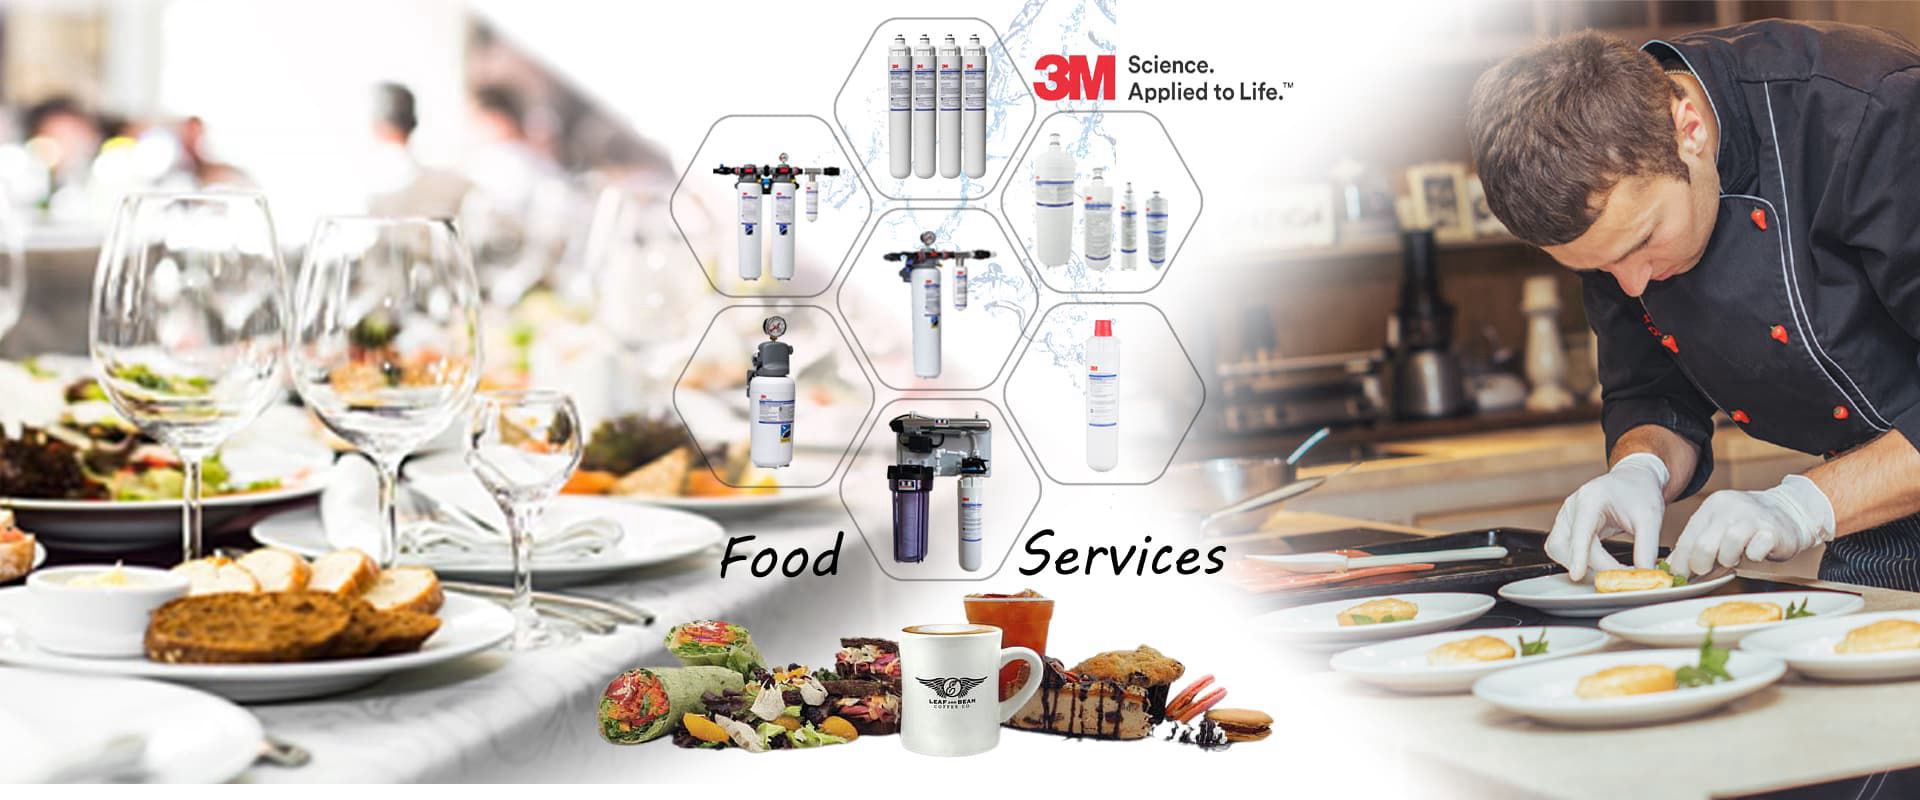 Martech-Header-3M-Food-Services